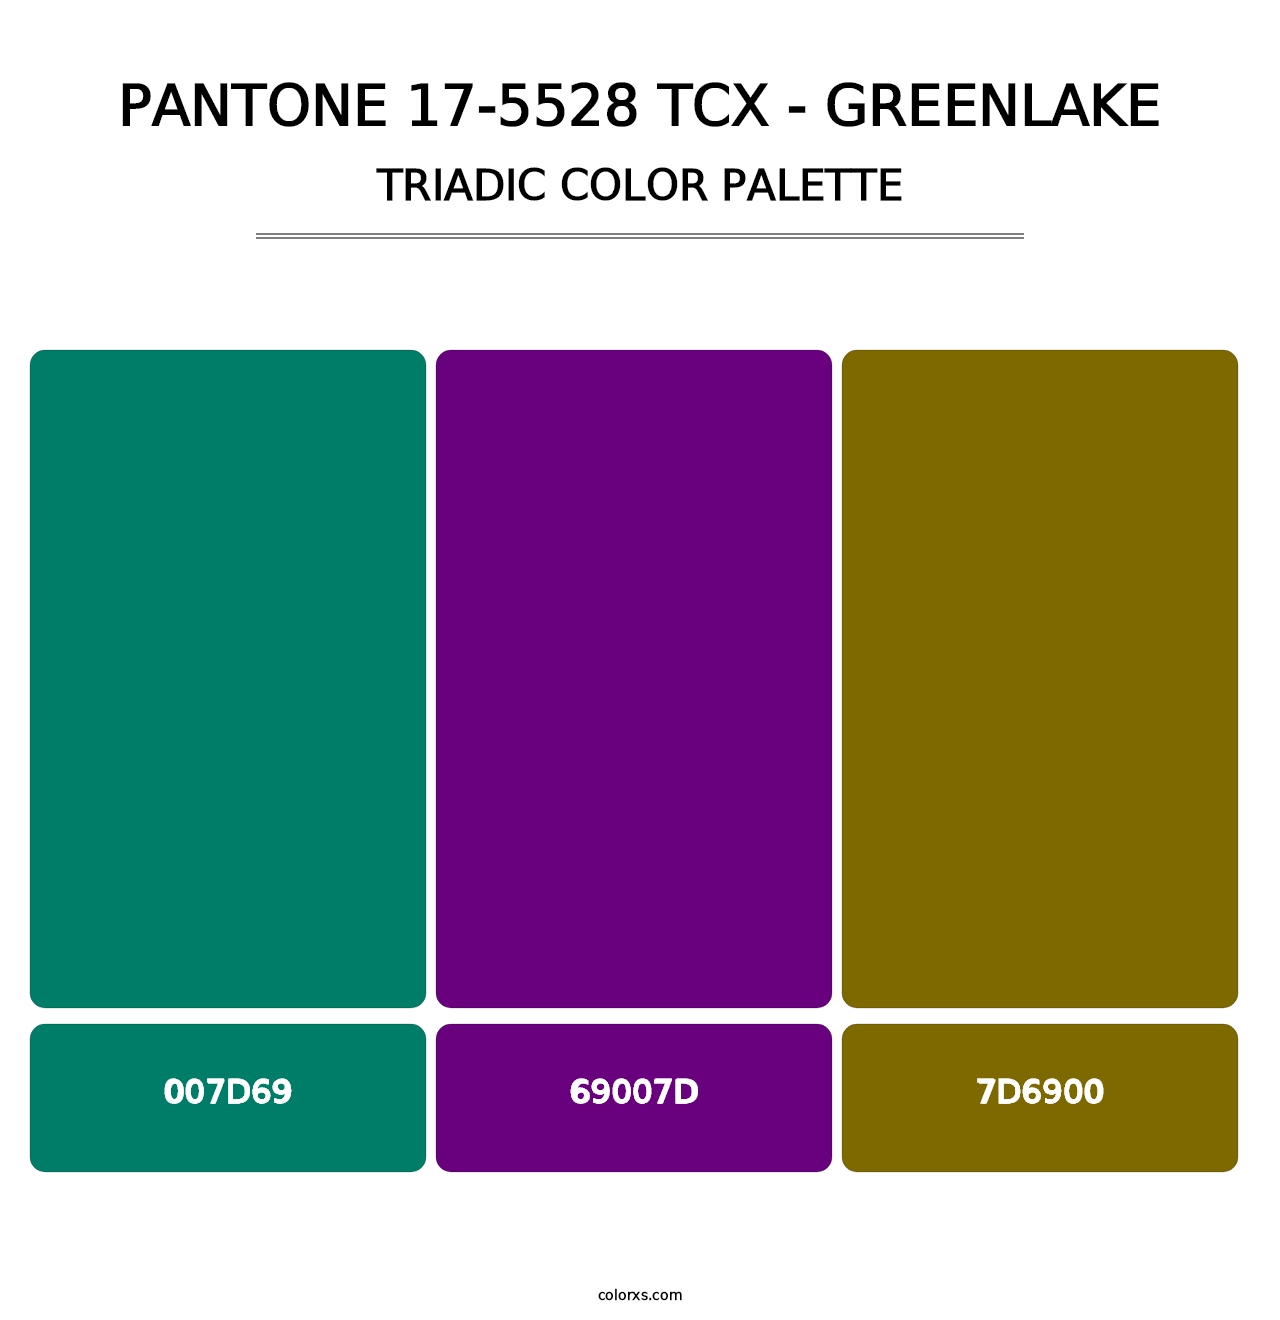 PANTONE 17-5528 TCX - Greenlake - Triadic Color Palette